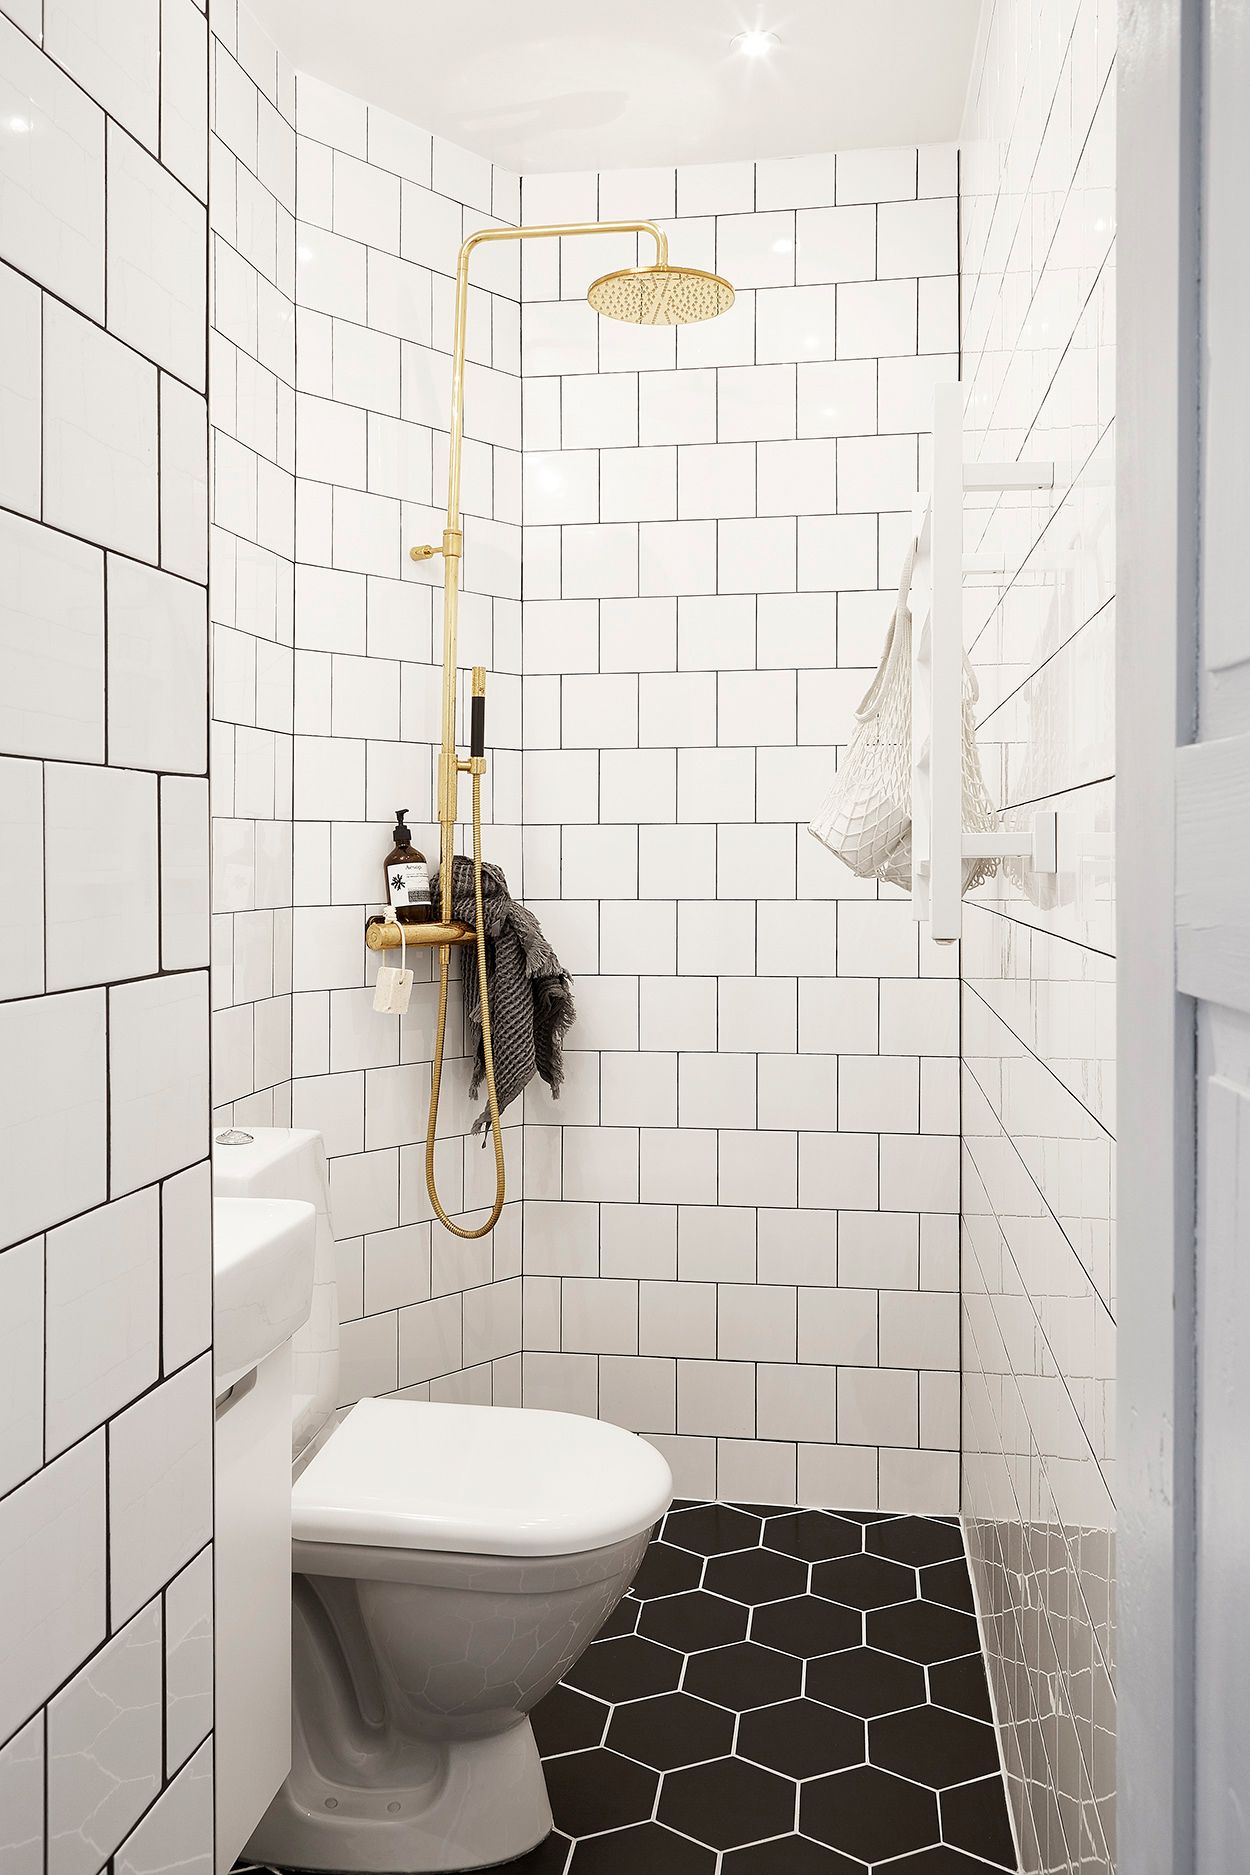 35 Small Bathroom Design Ideas Small Bathroom Solutions,Grey And White Bathroom Tile Designs